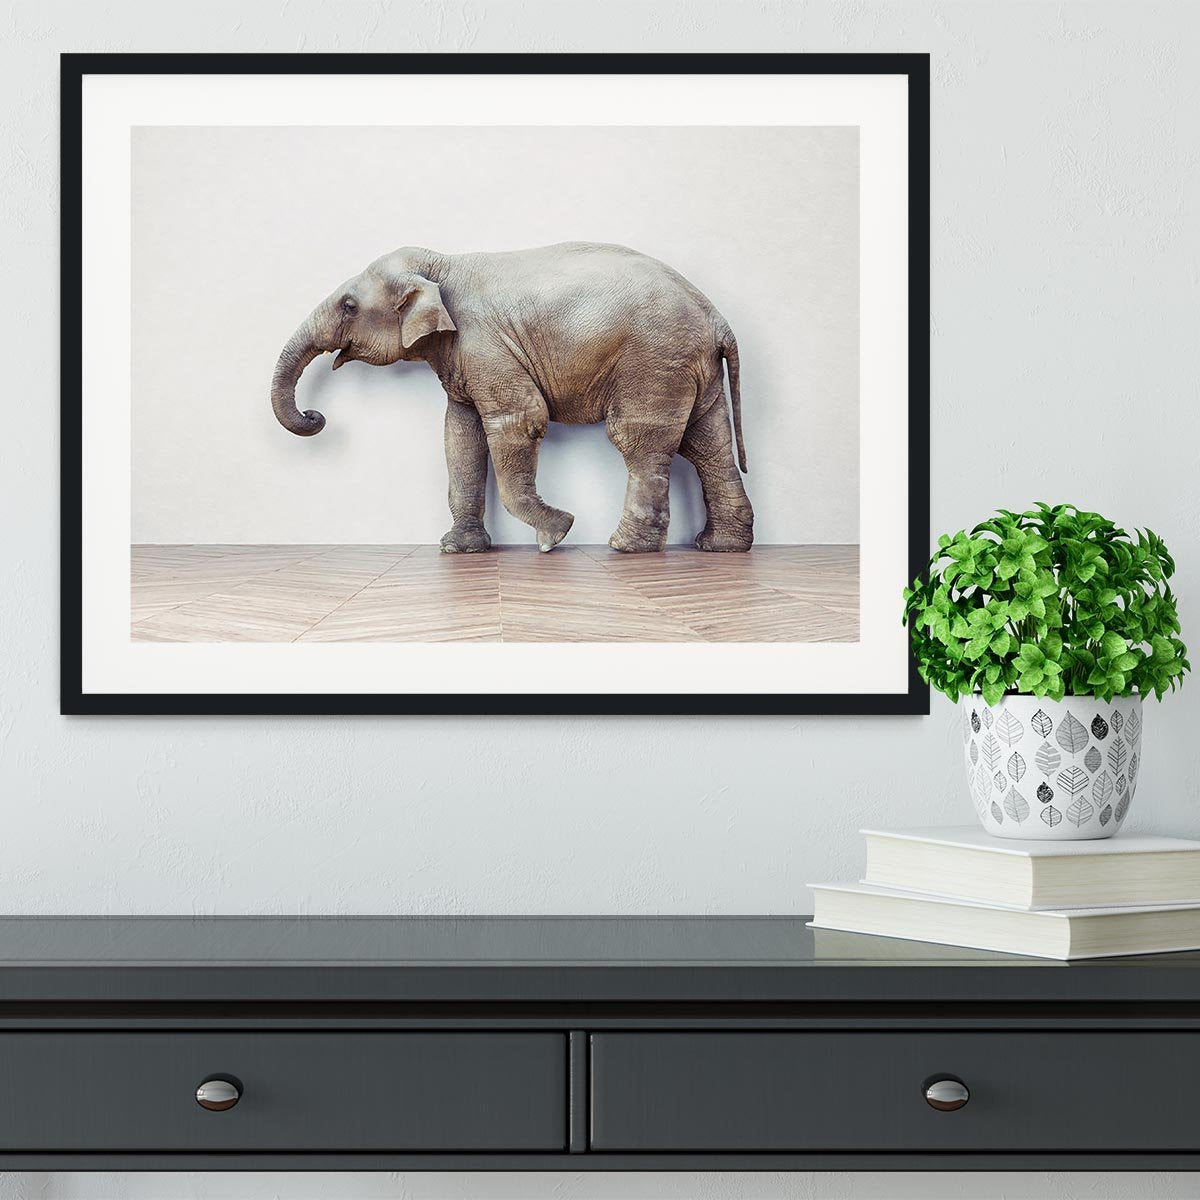 The elephant calm in the room near white wall Framed Print - Canvas Art Rocks - 1